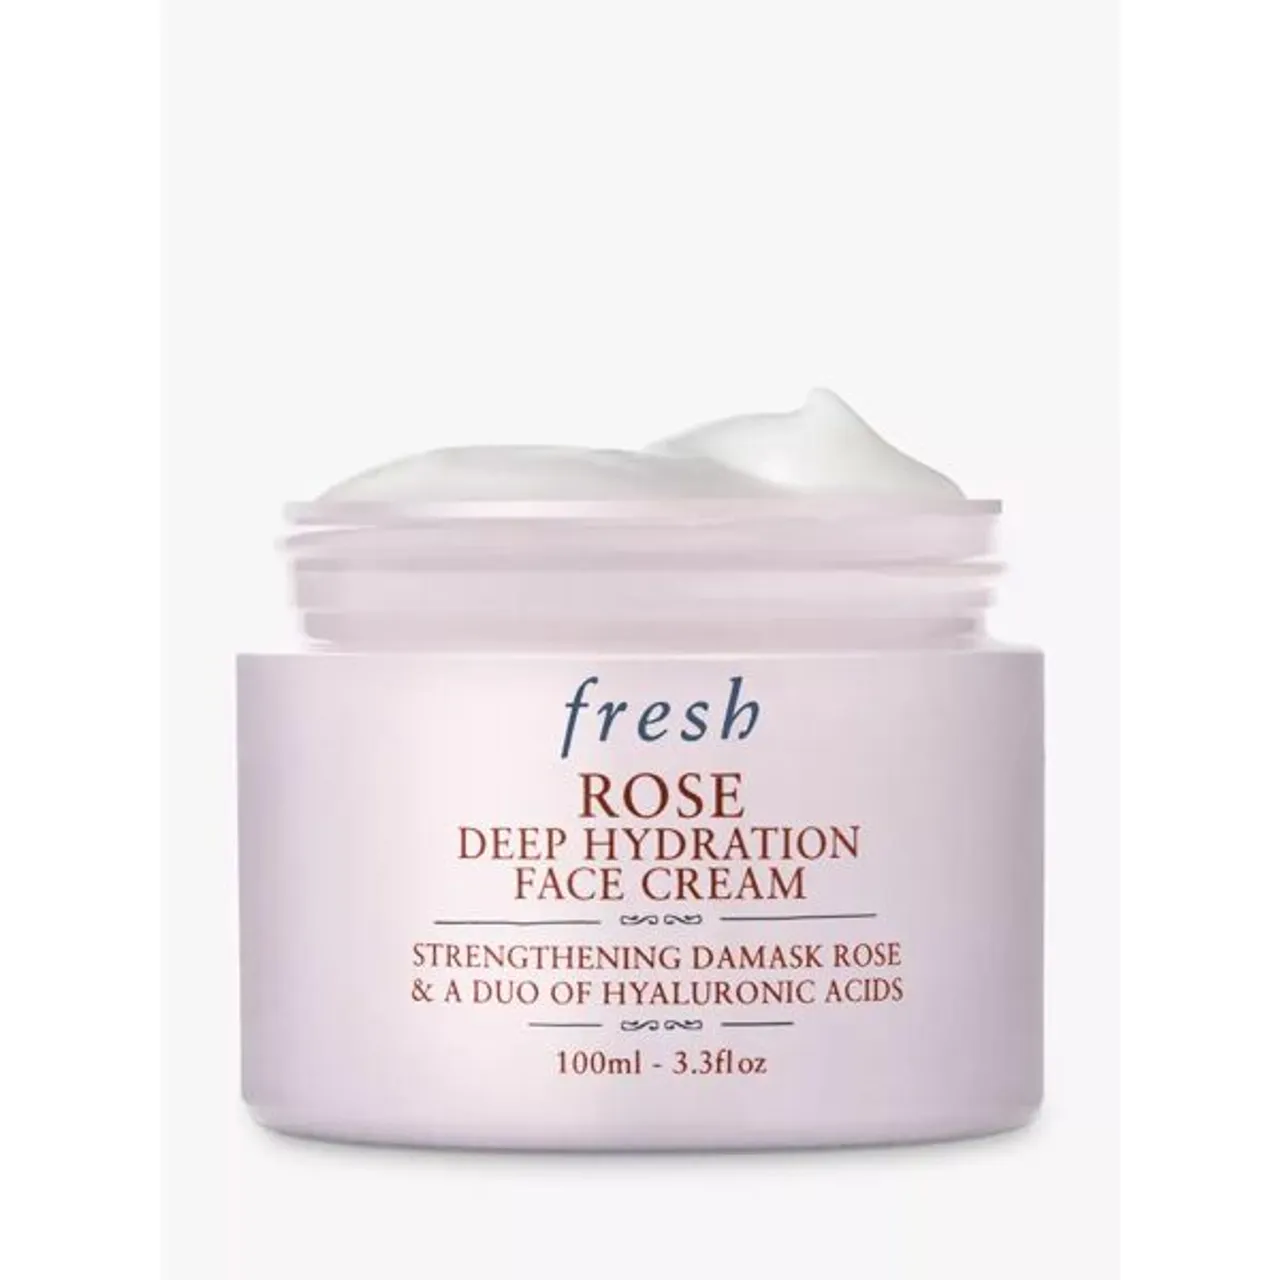 Fresh Rose Deep Hydration Face Cream, 100ml - White - Unisex - Size: 30ml